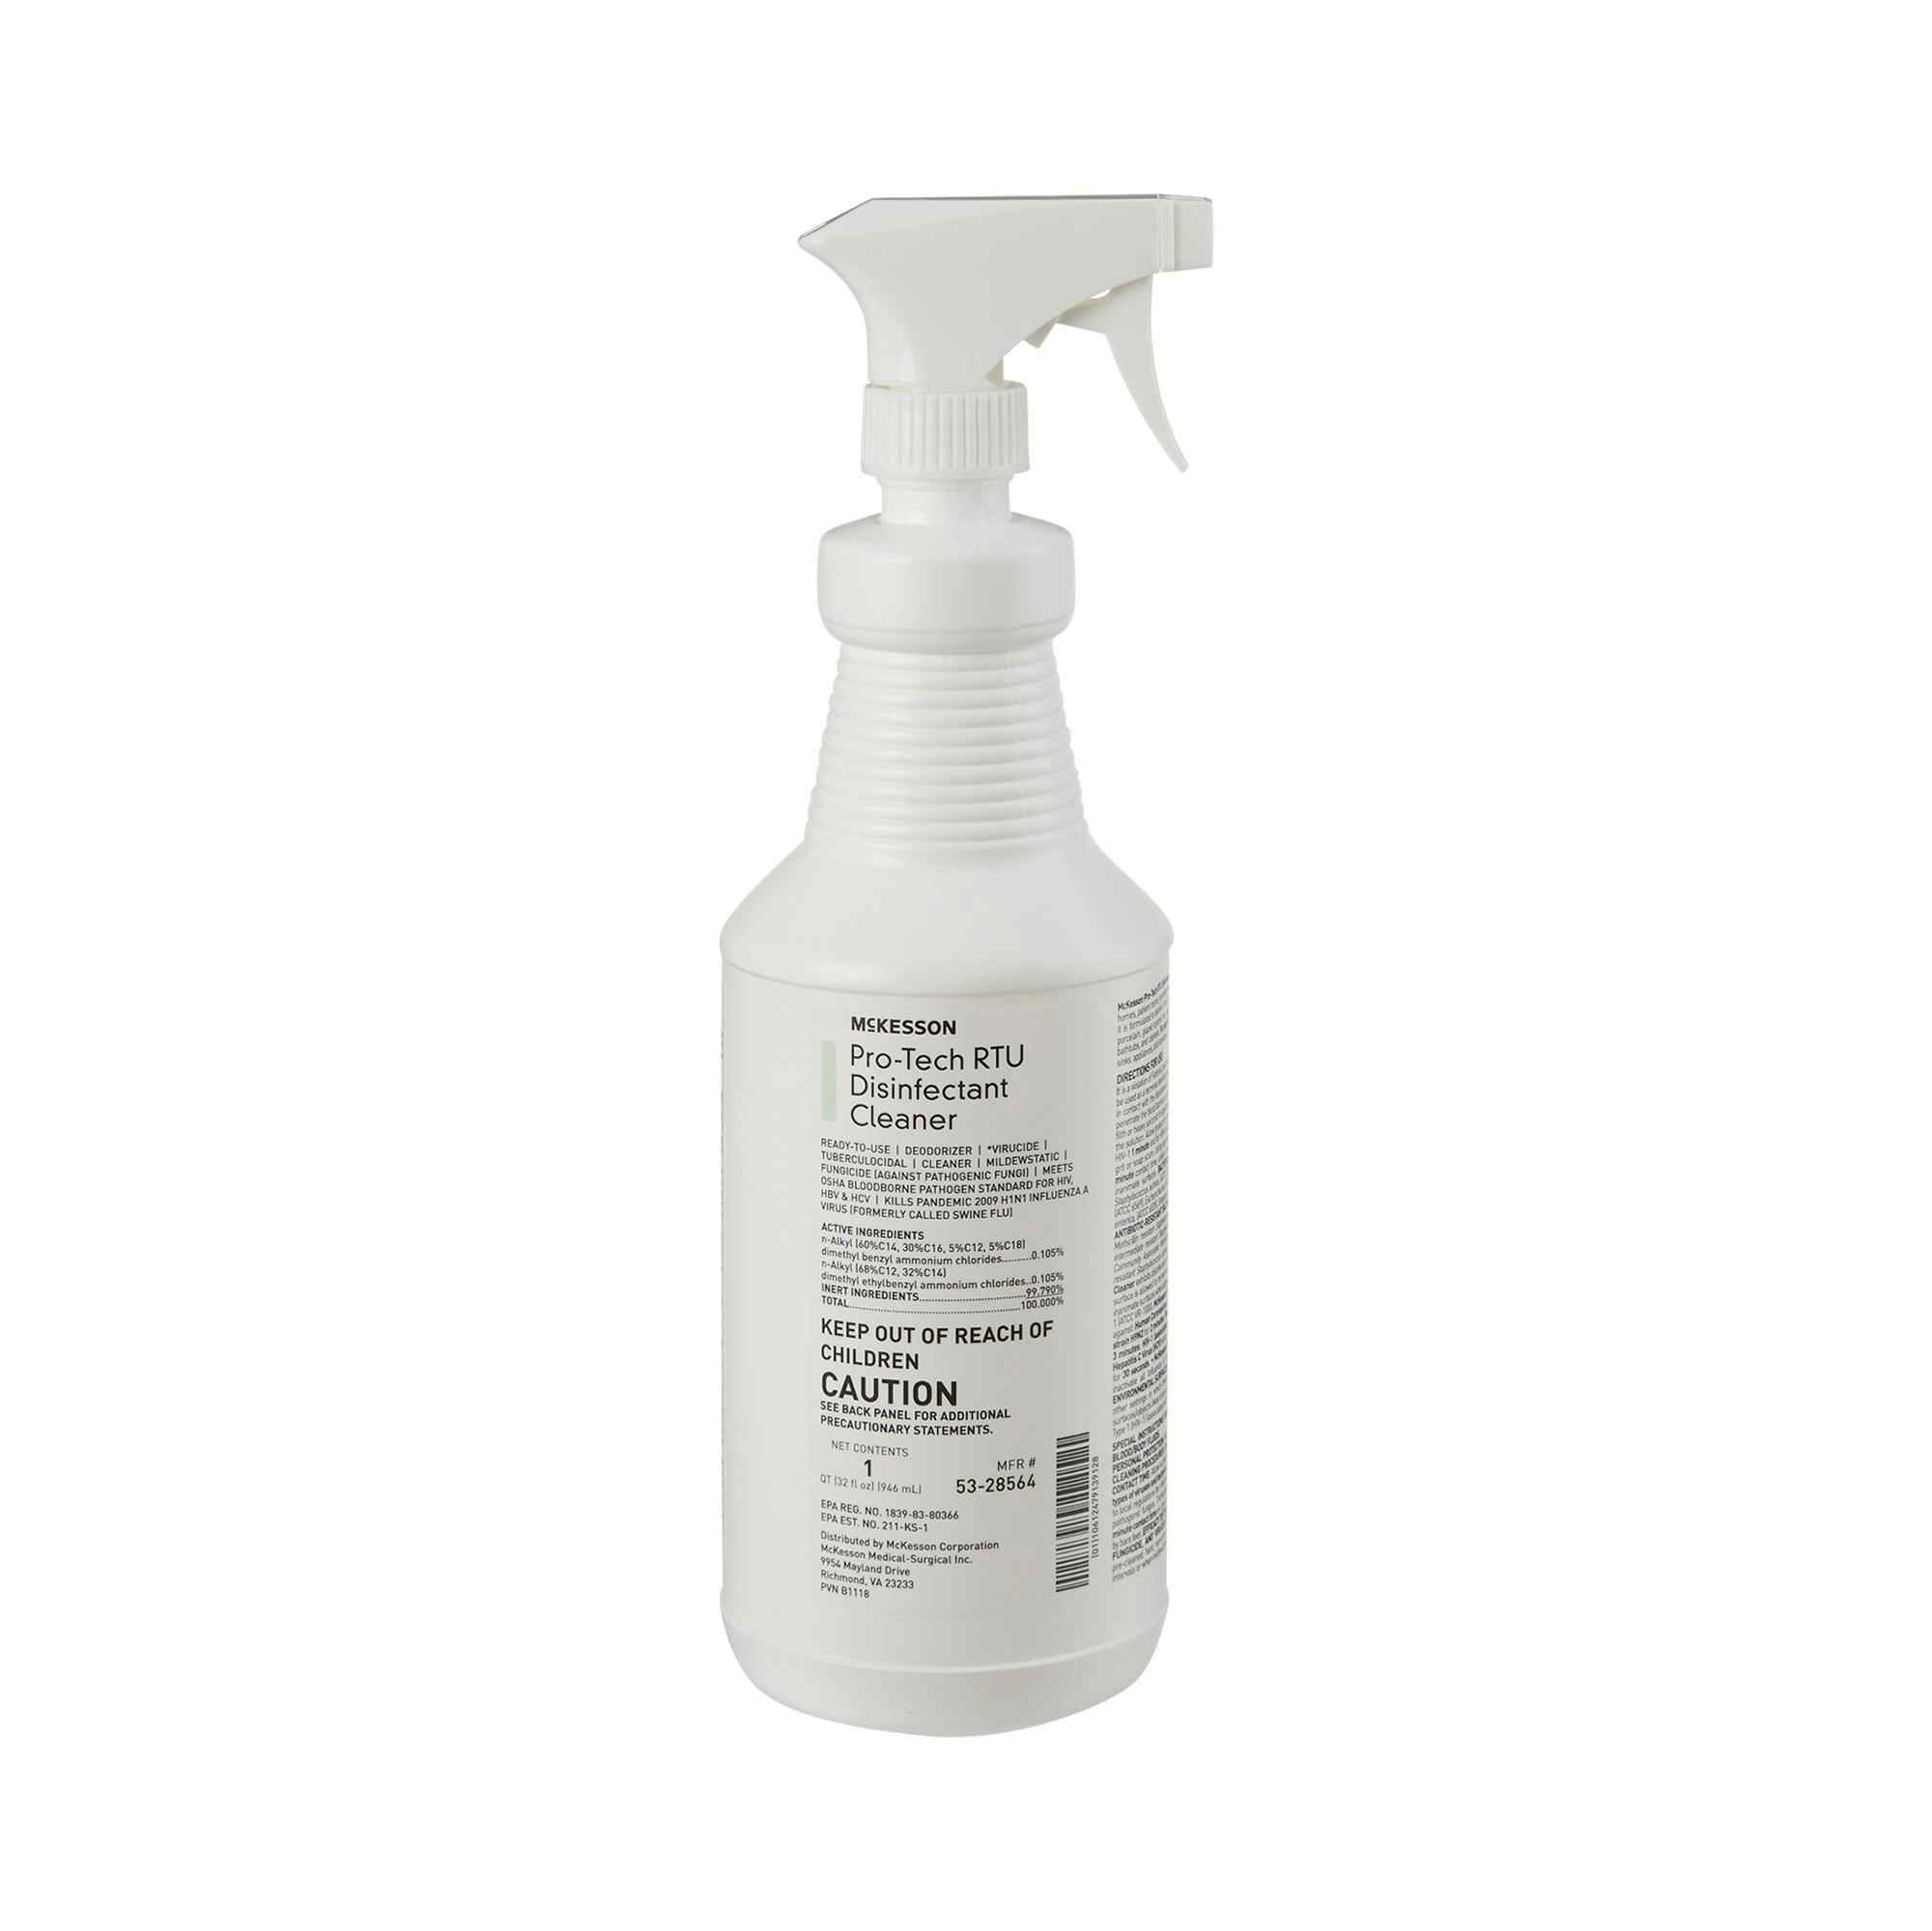 McKesson Pro-Tech RTU Disinfectant Cleaner, 53-28564, 32 oz. - 1 Each